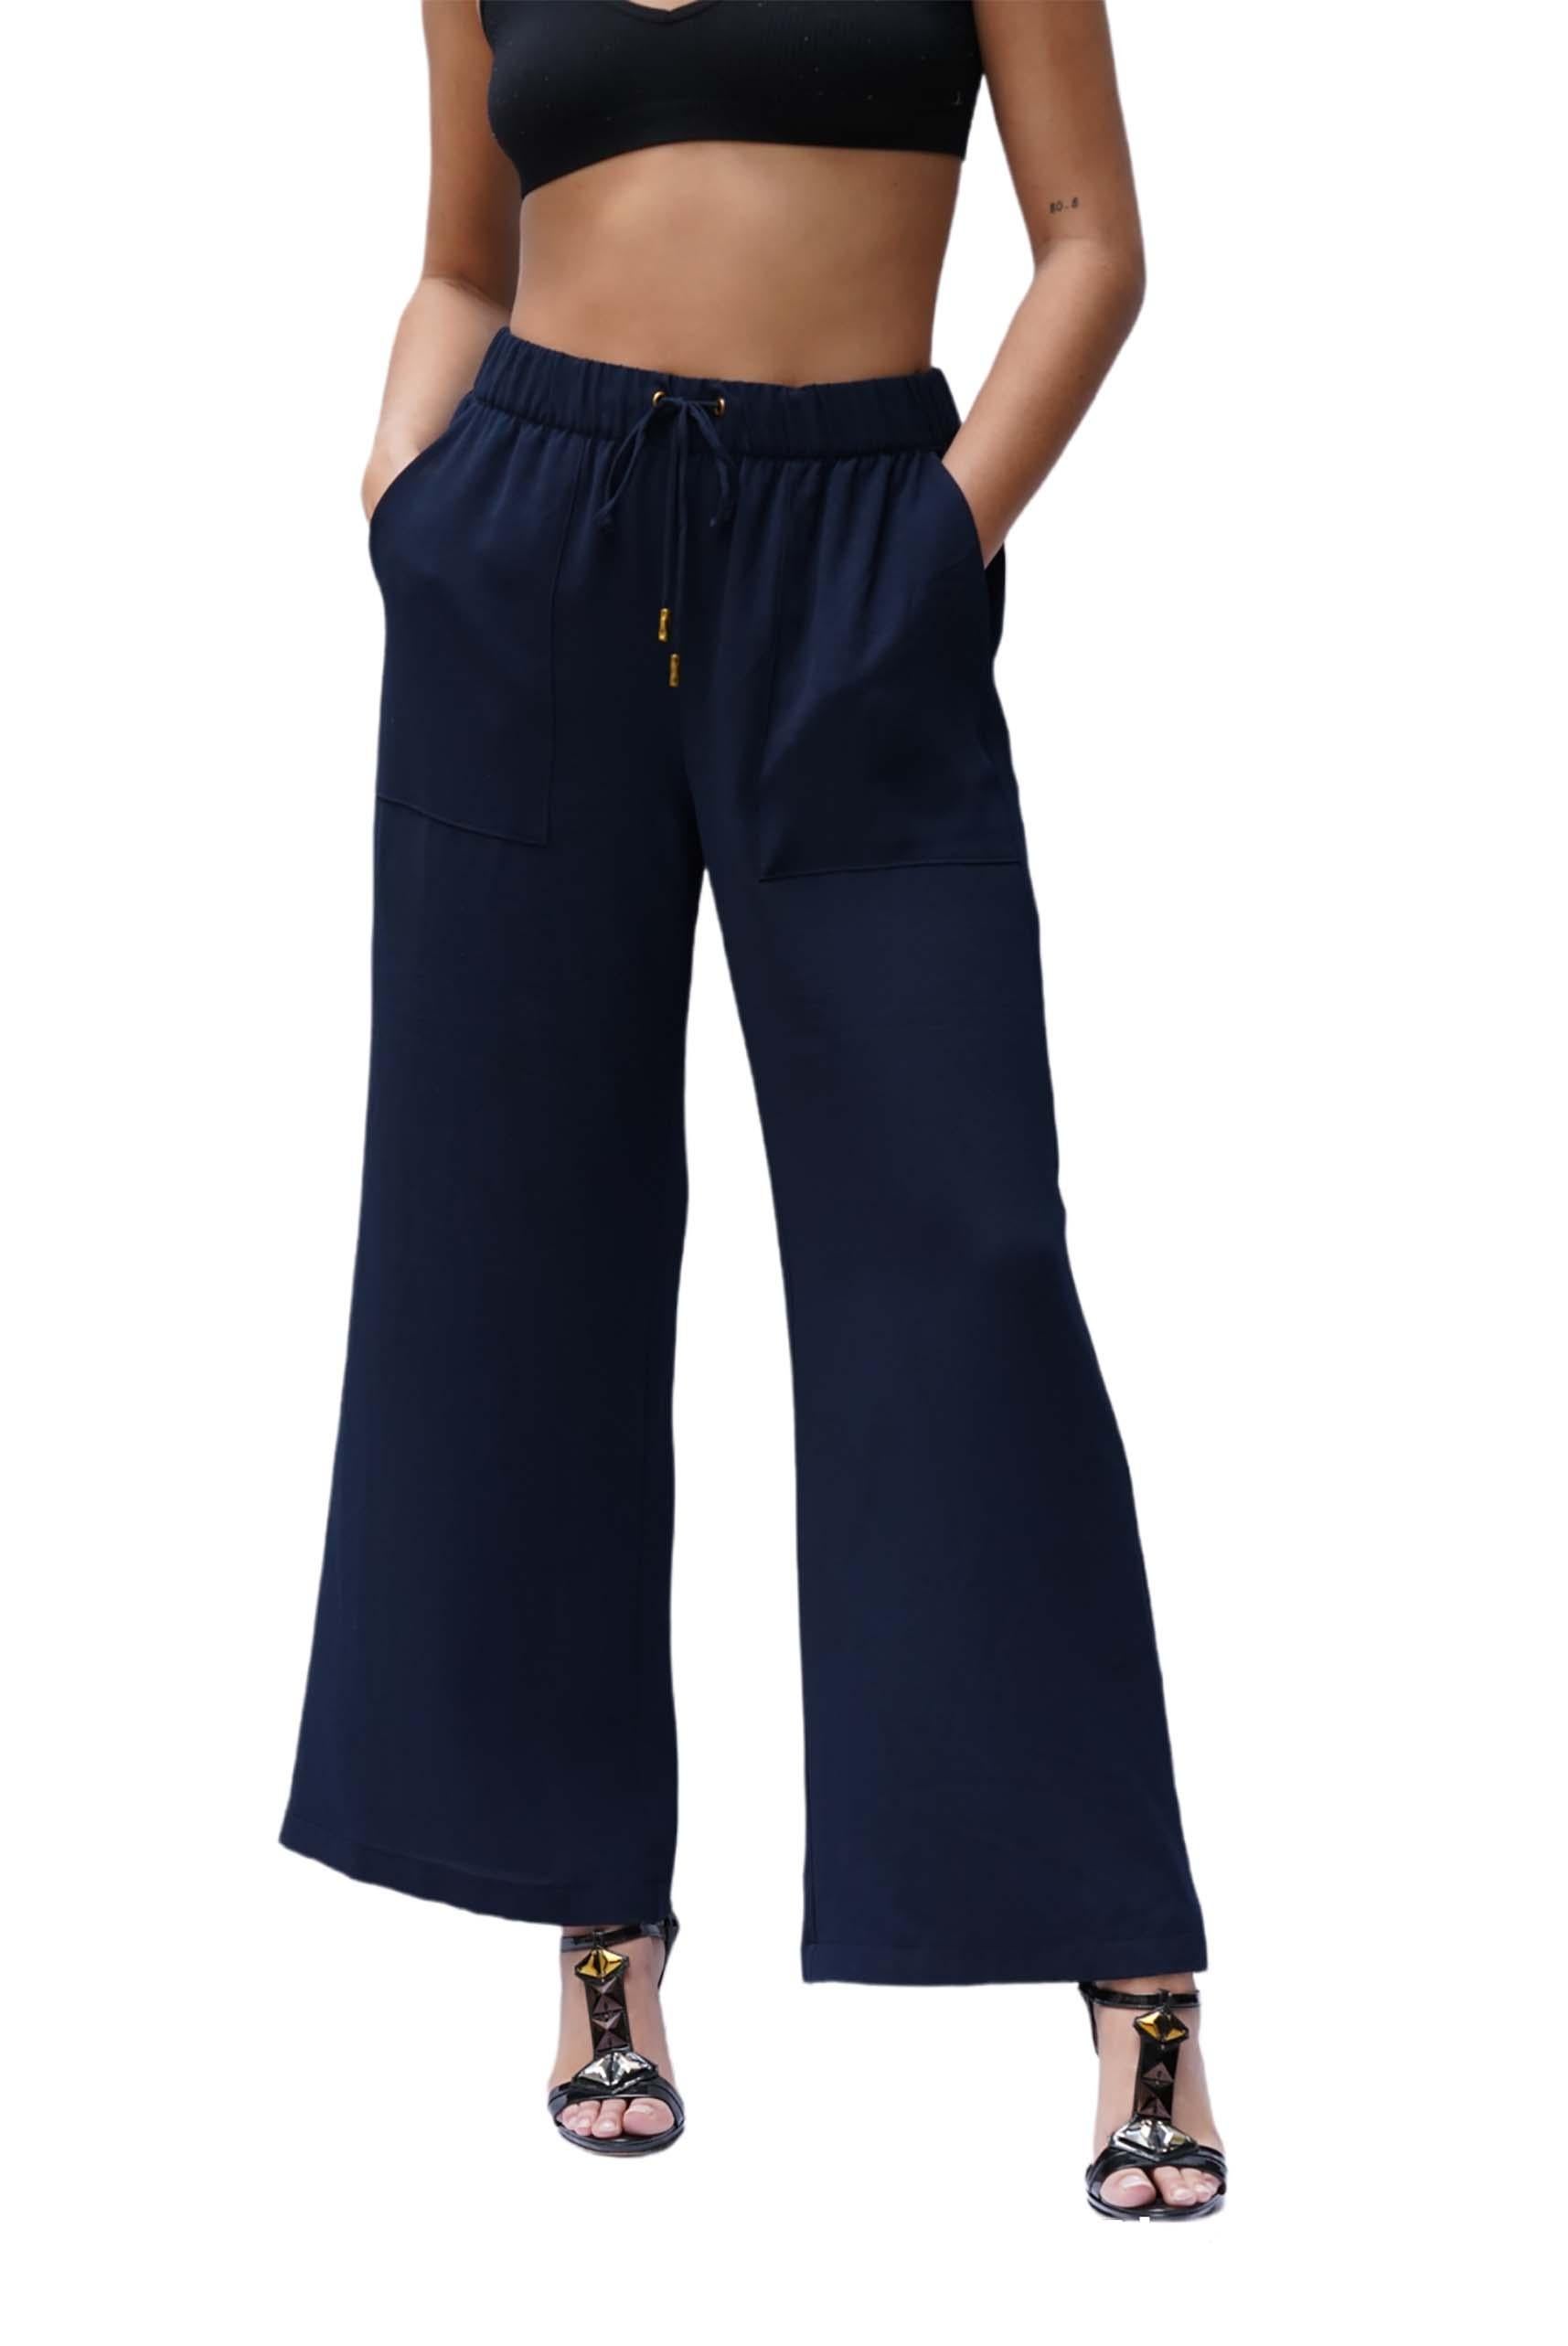 1990S DONNA KARAN Navy Blue Drawstring Pants For Sale 2